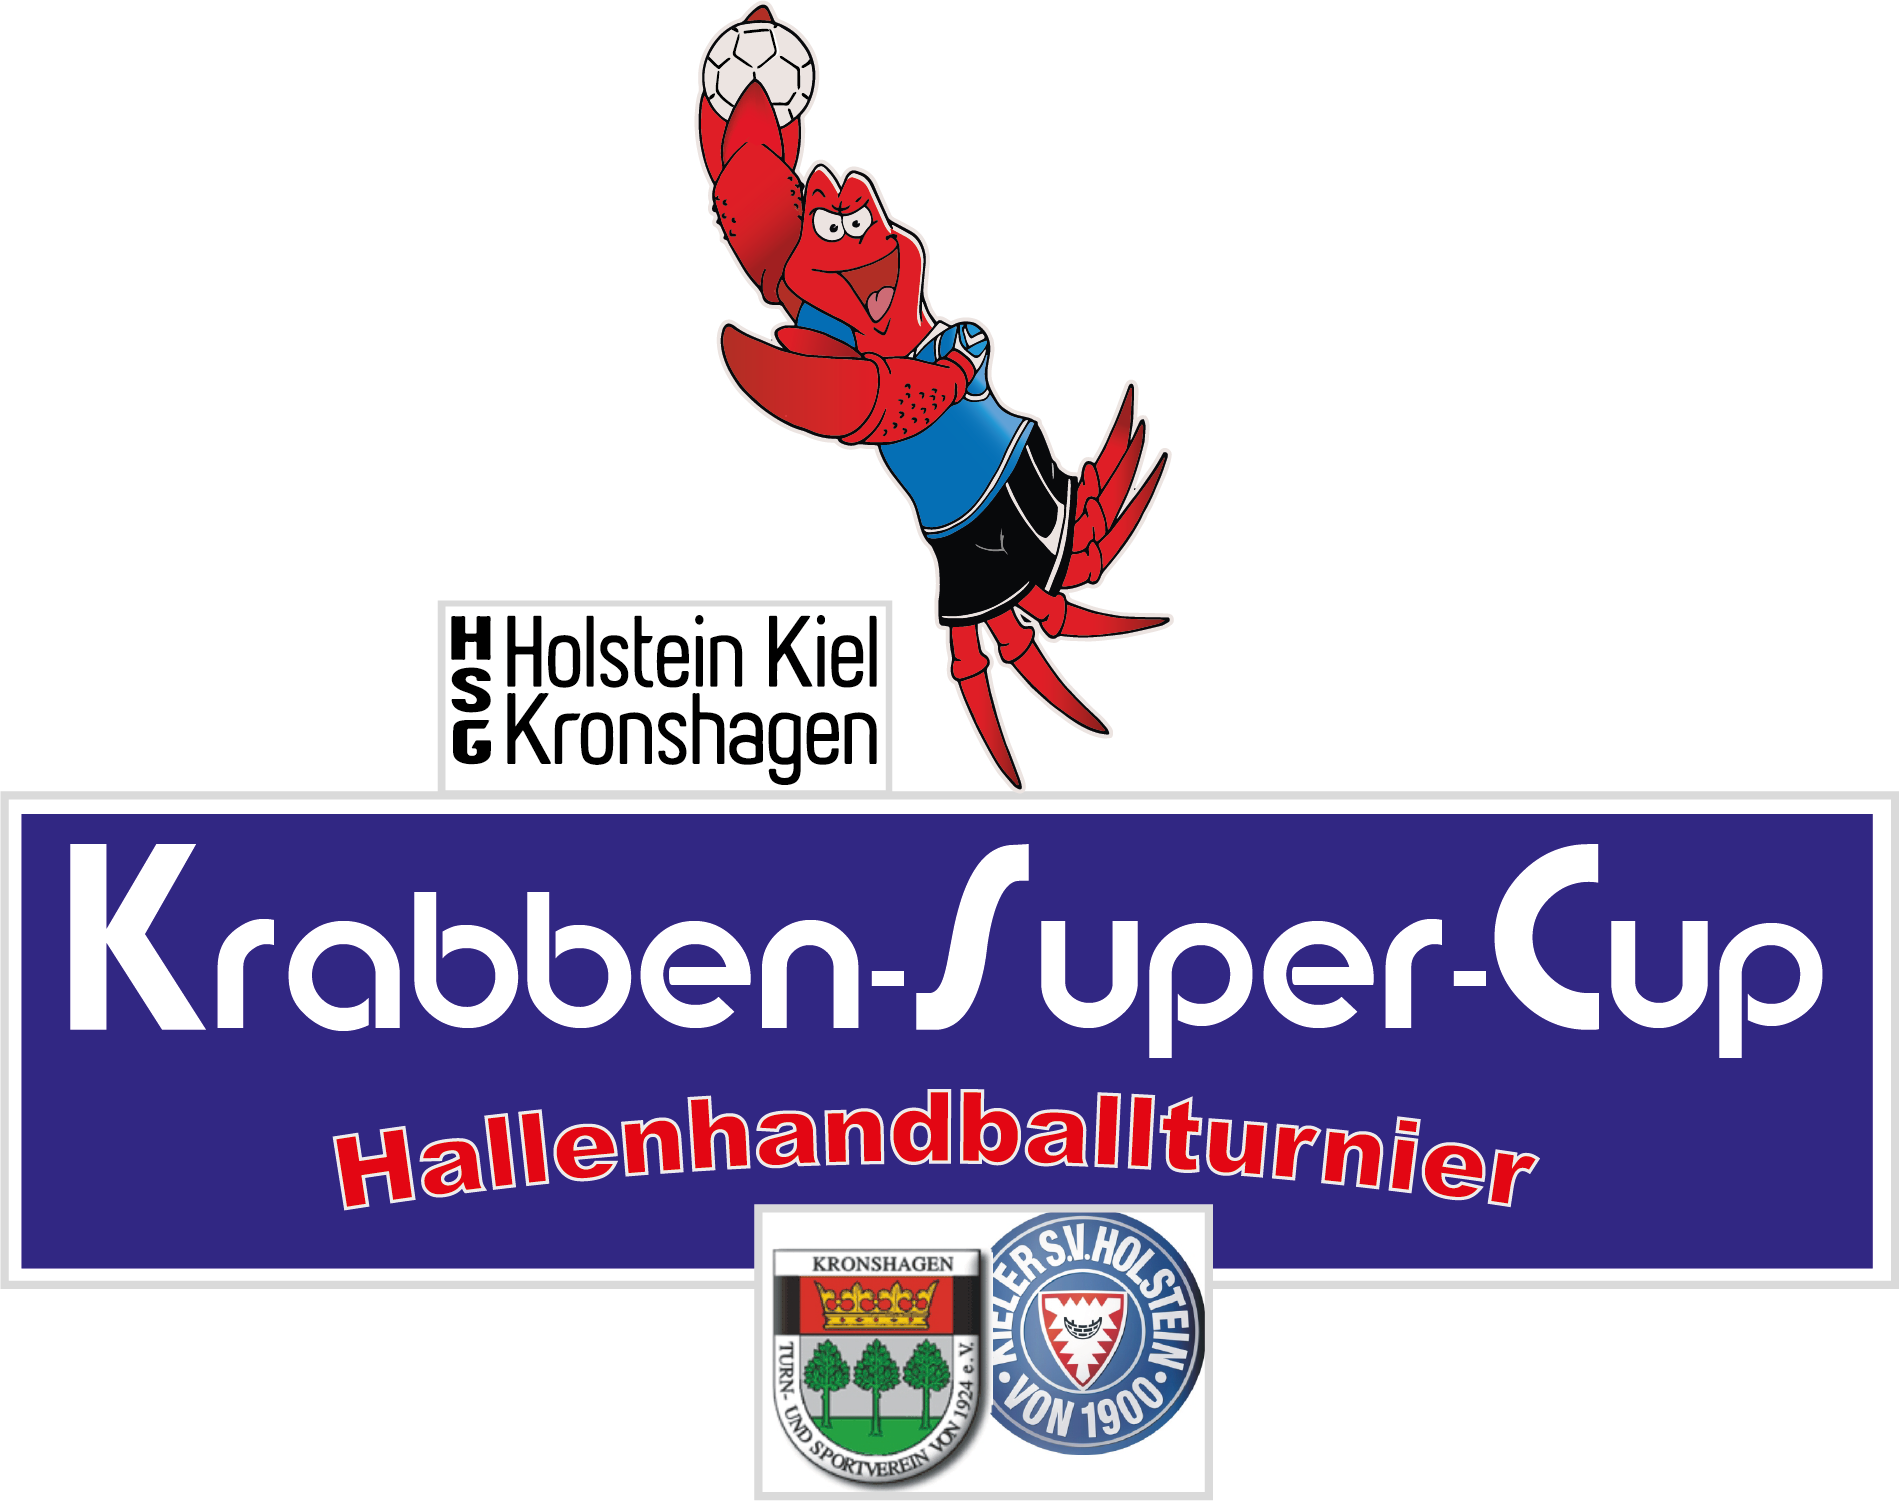 Krabben-Super-Cup